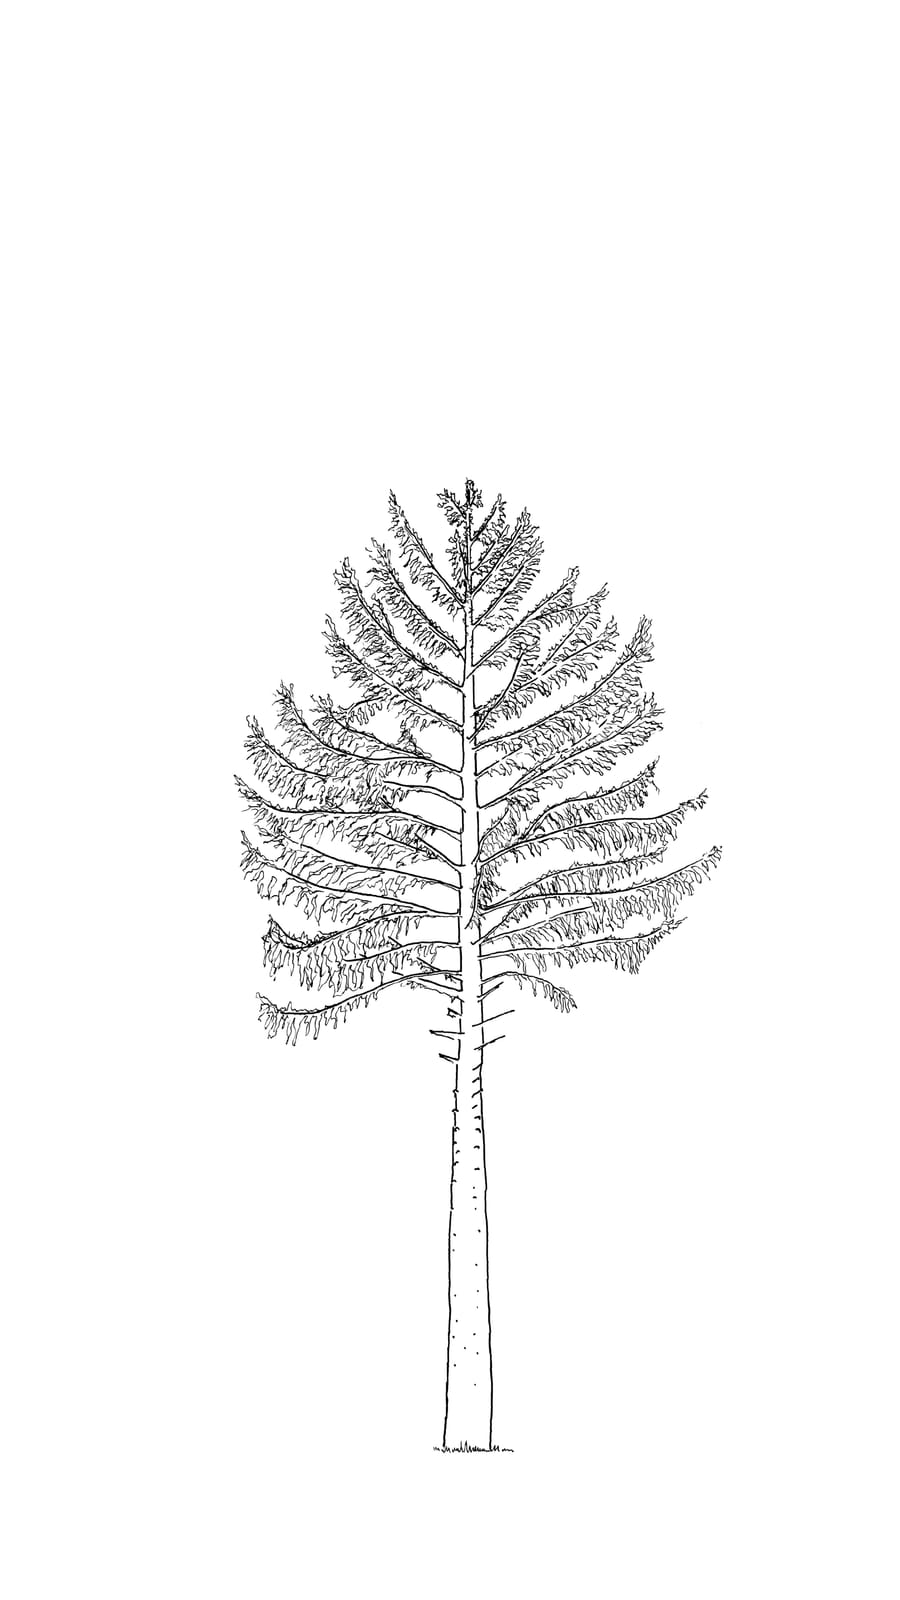 Black line sketch of a 35 year old douglas fir tree